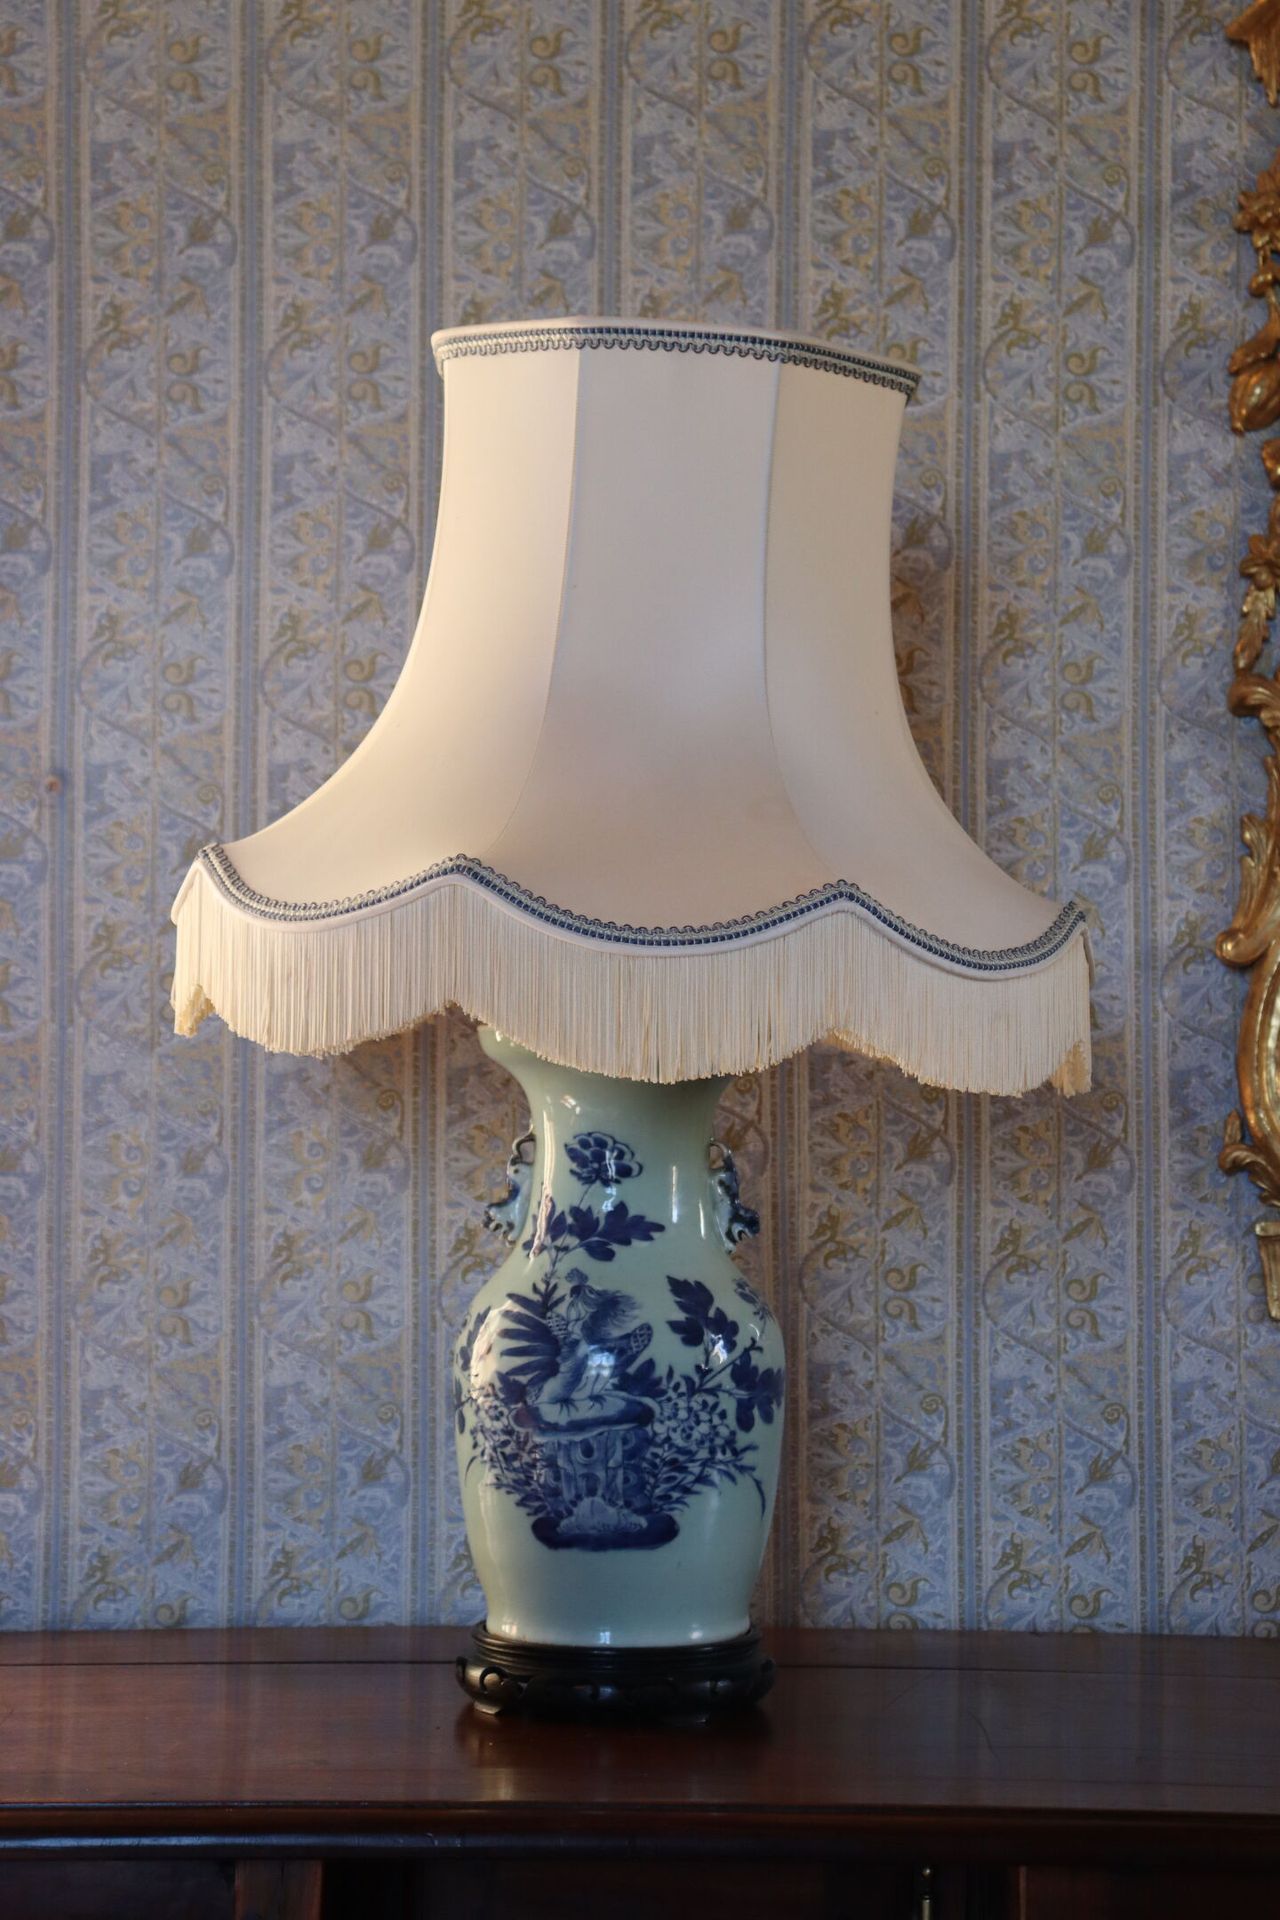 Null 中国瓷器柱形花瓶，装饰有青花瓷背景的鹰和花。
高度：34厘米
安装成一盏灯。